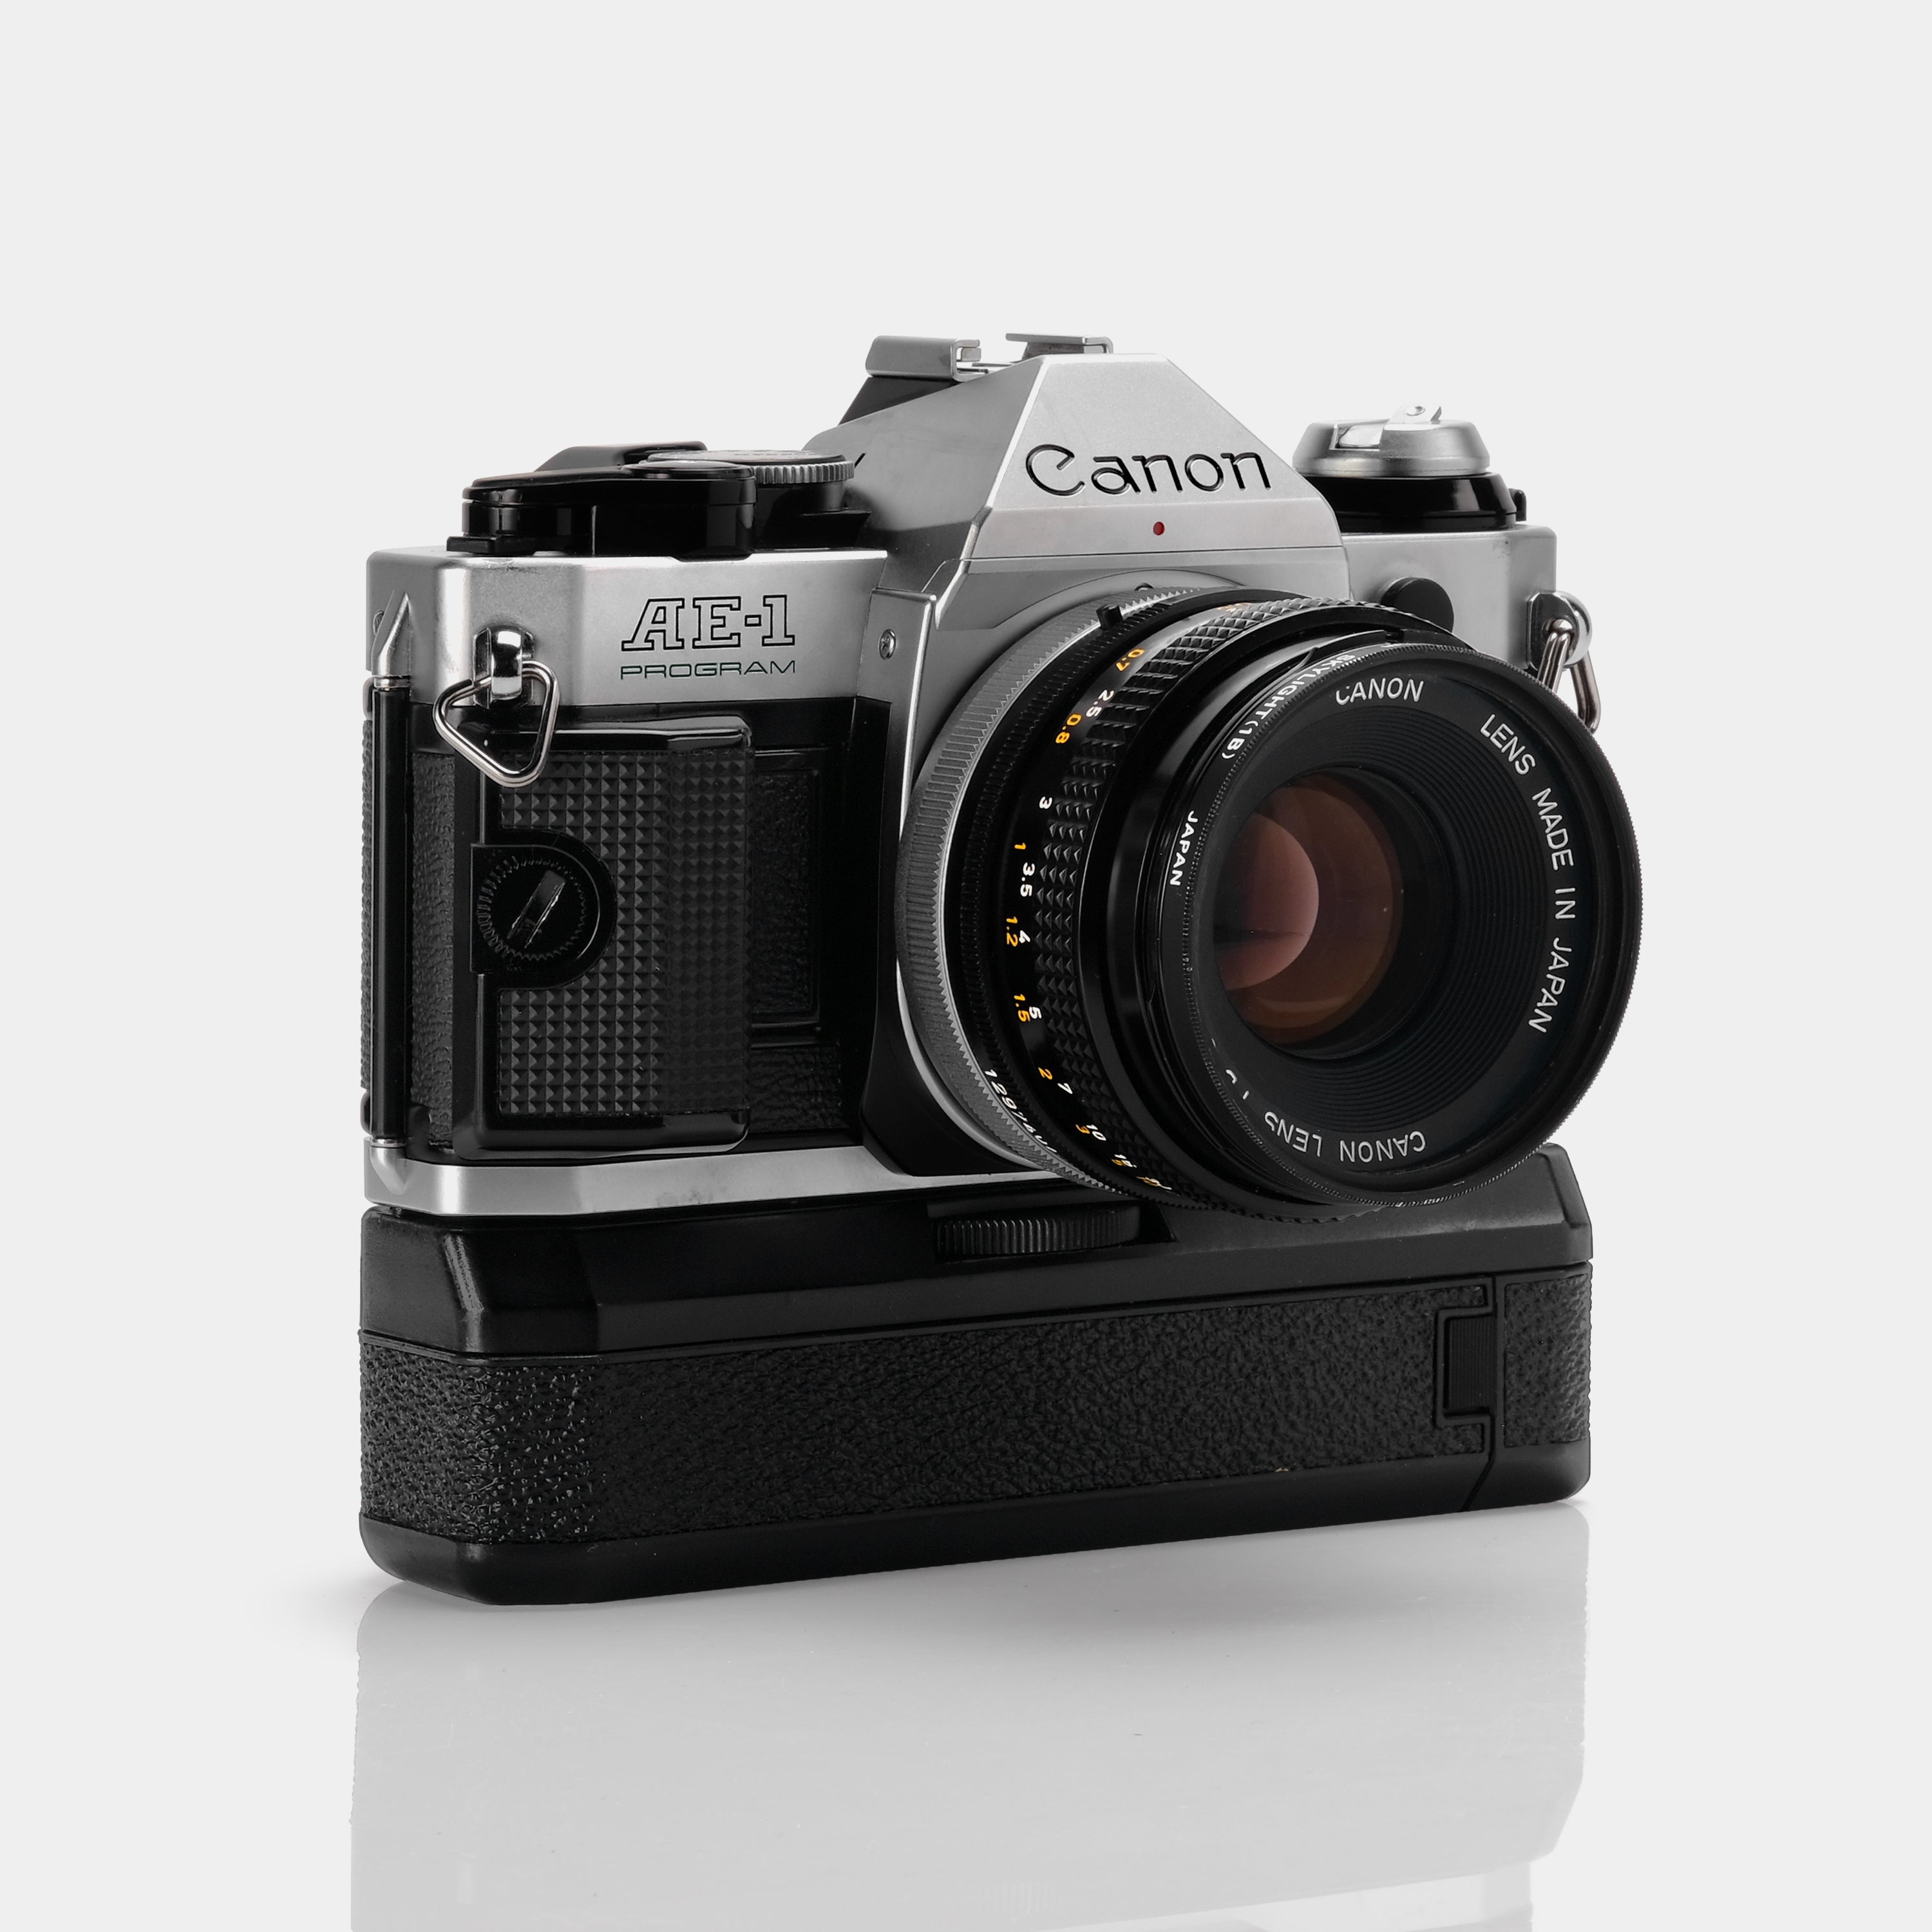 Canon AE-1 Program SLR 35mm Film Camera (